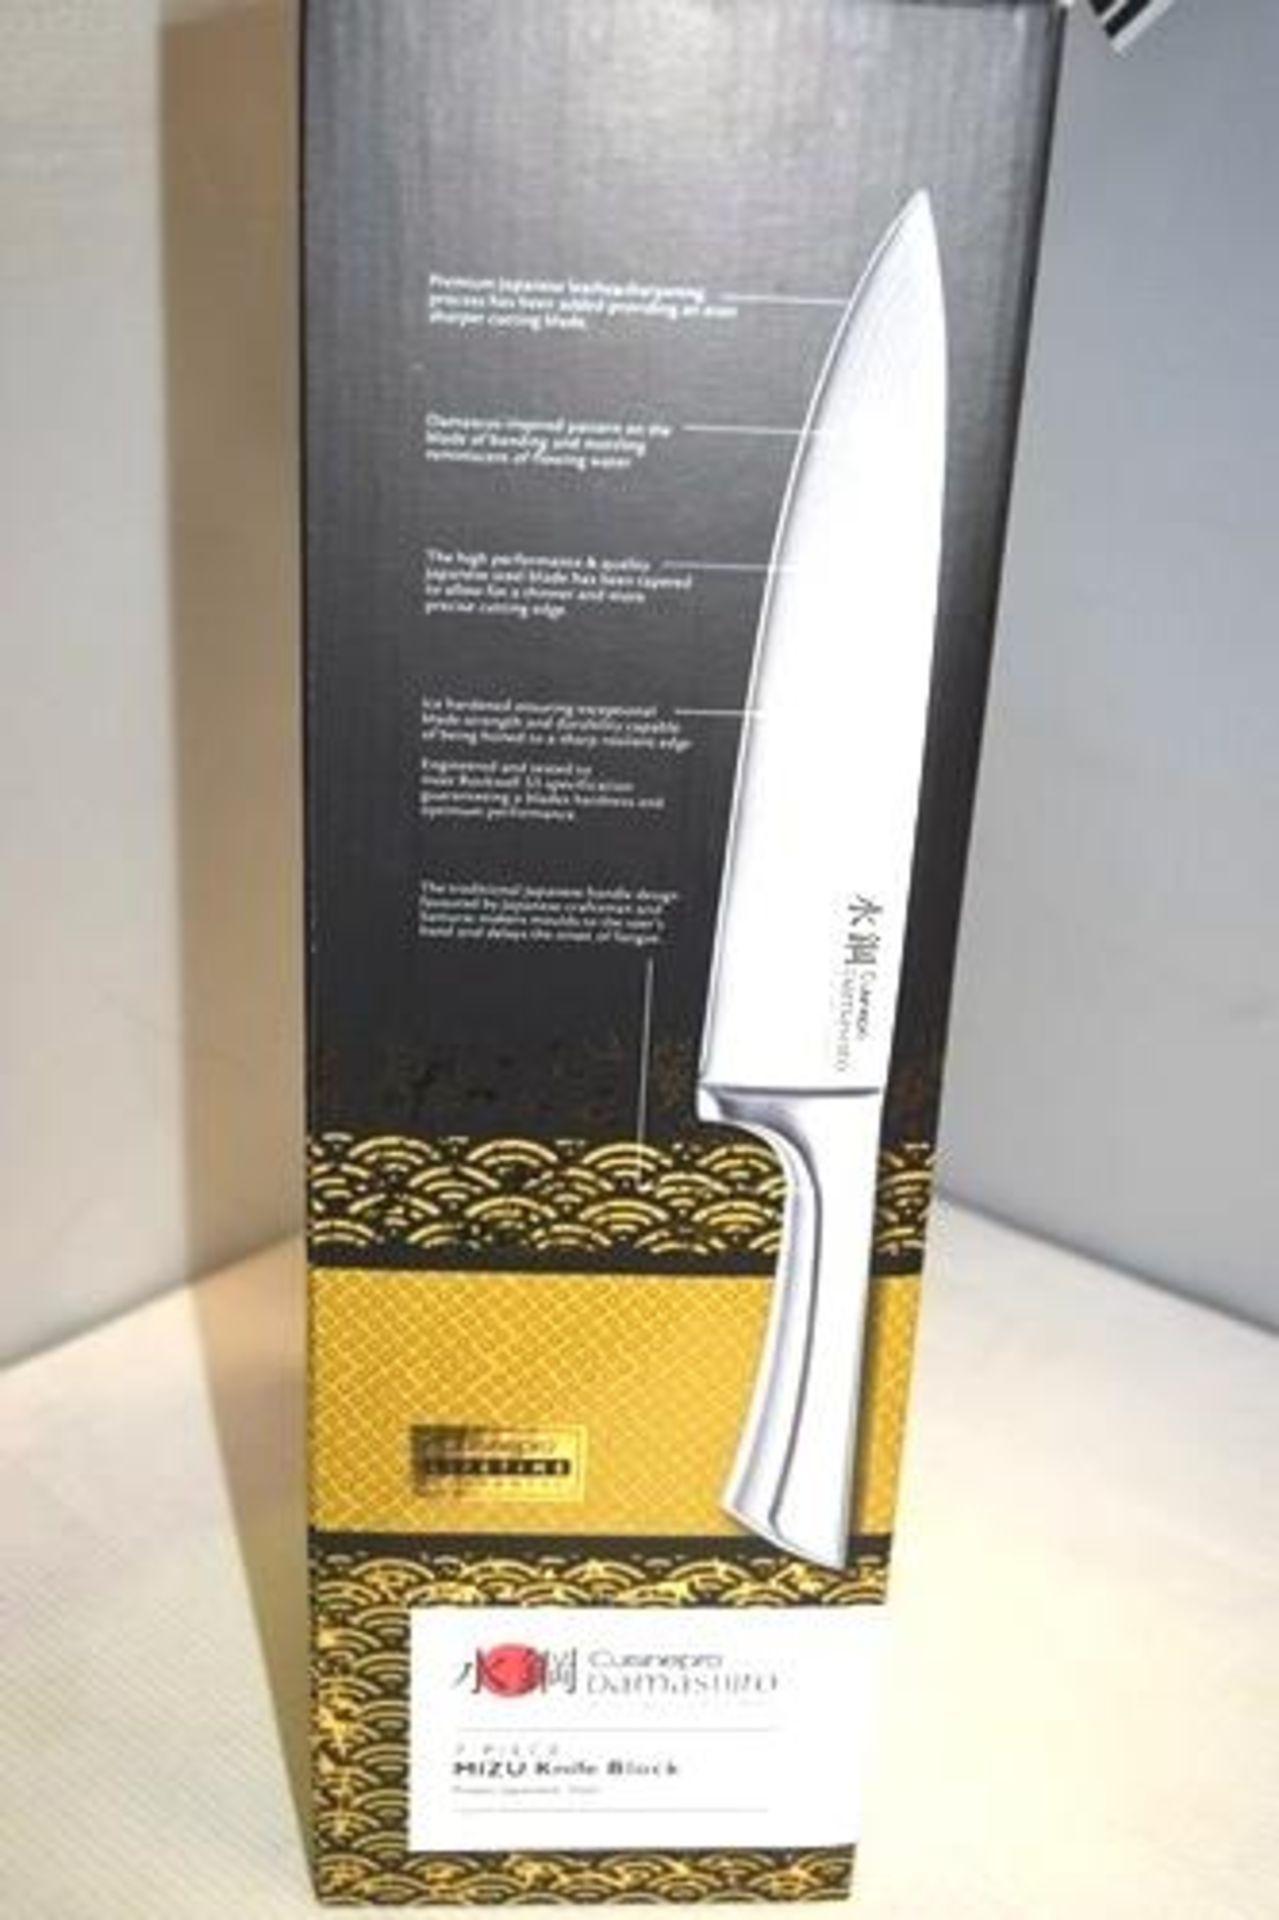 Damashiro 7 piece knife set in oak knife block - New (C12B) - Image 2 of 2